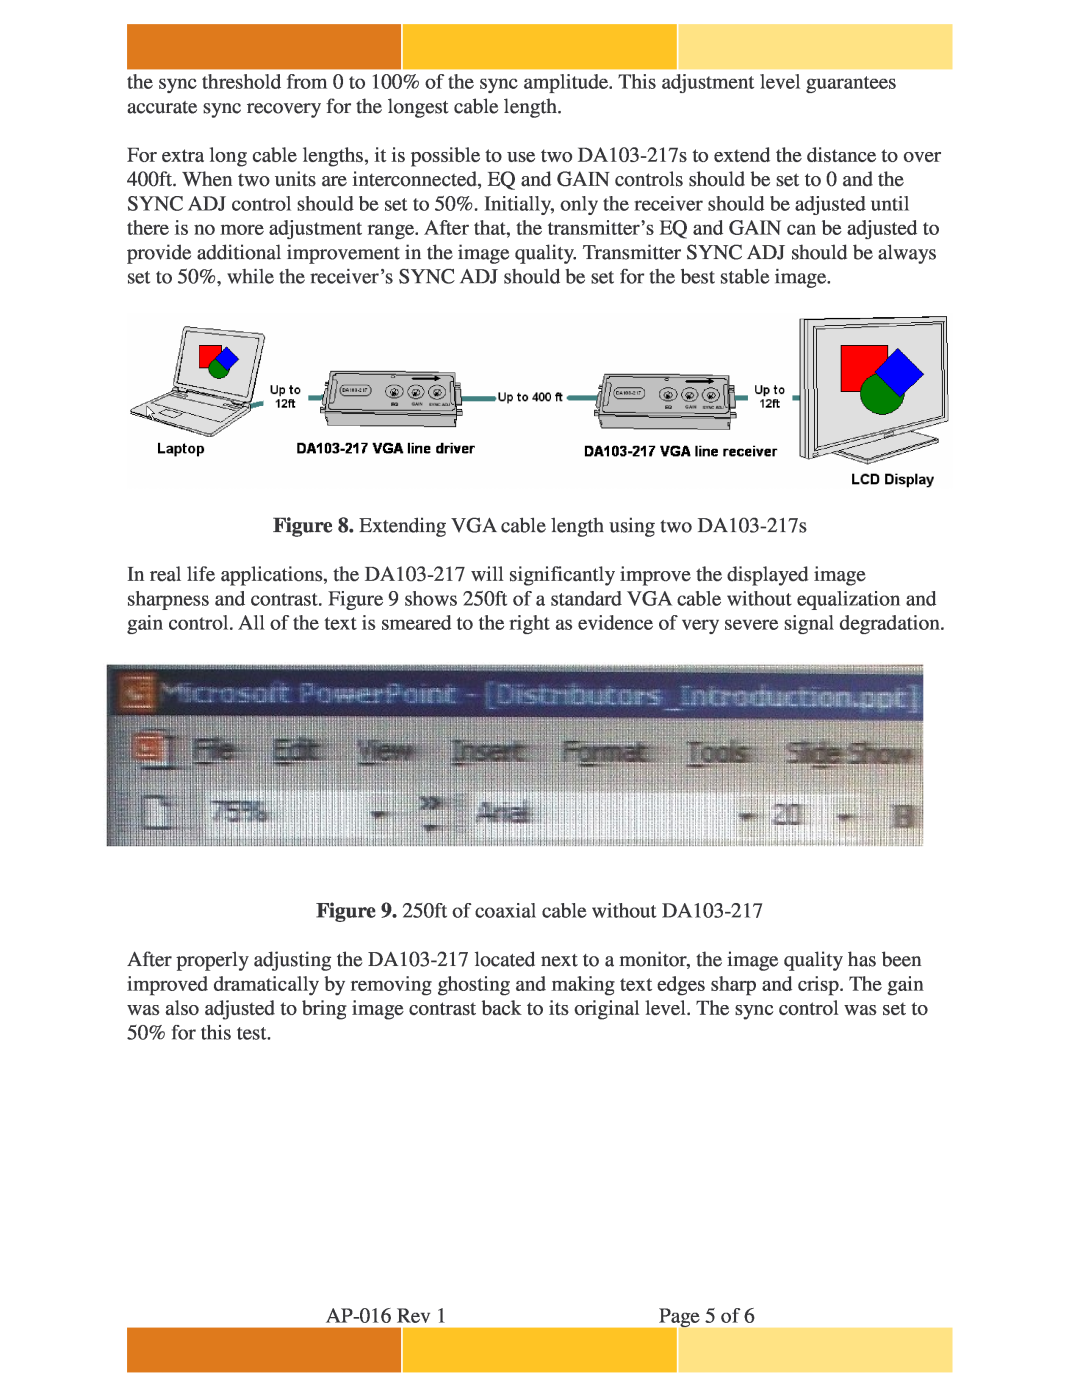 Altinex DA103-217 manual Page 5 of, AP-016Rev 